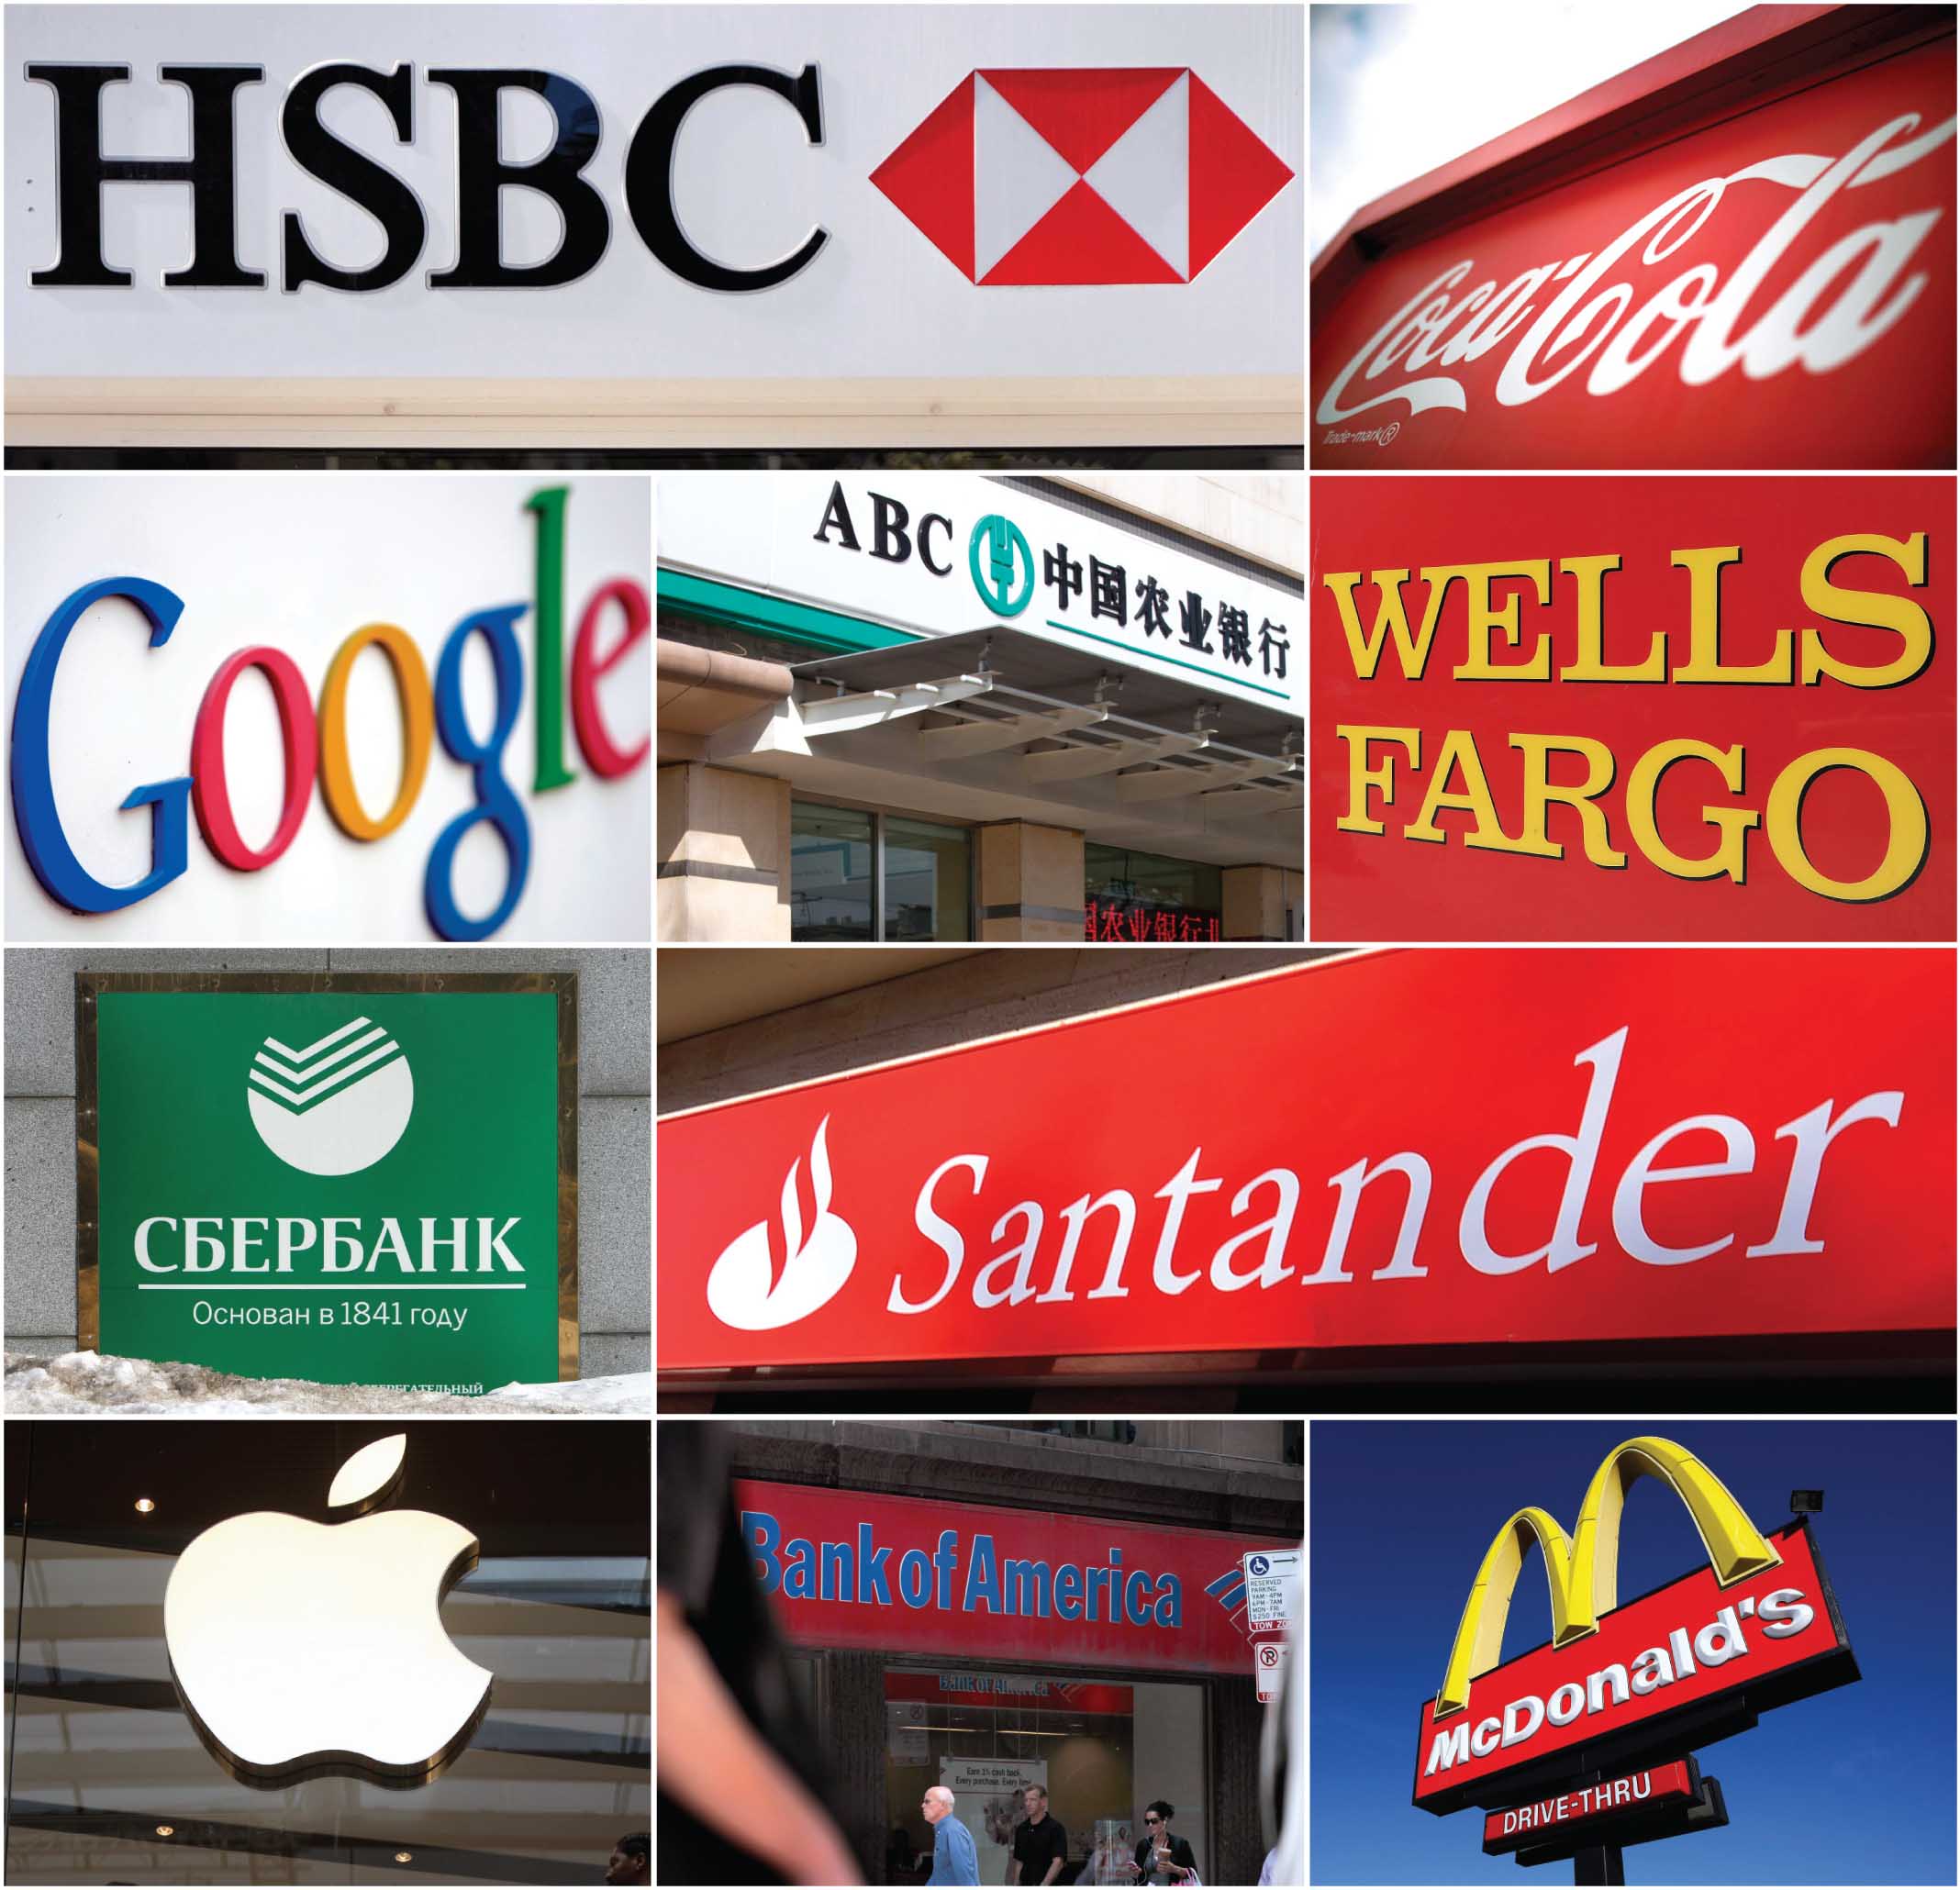 Banking brands